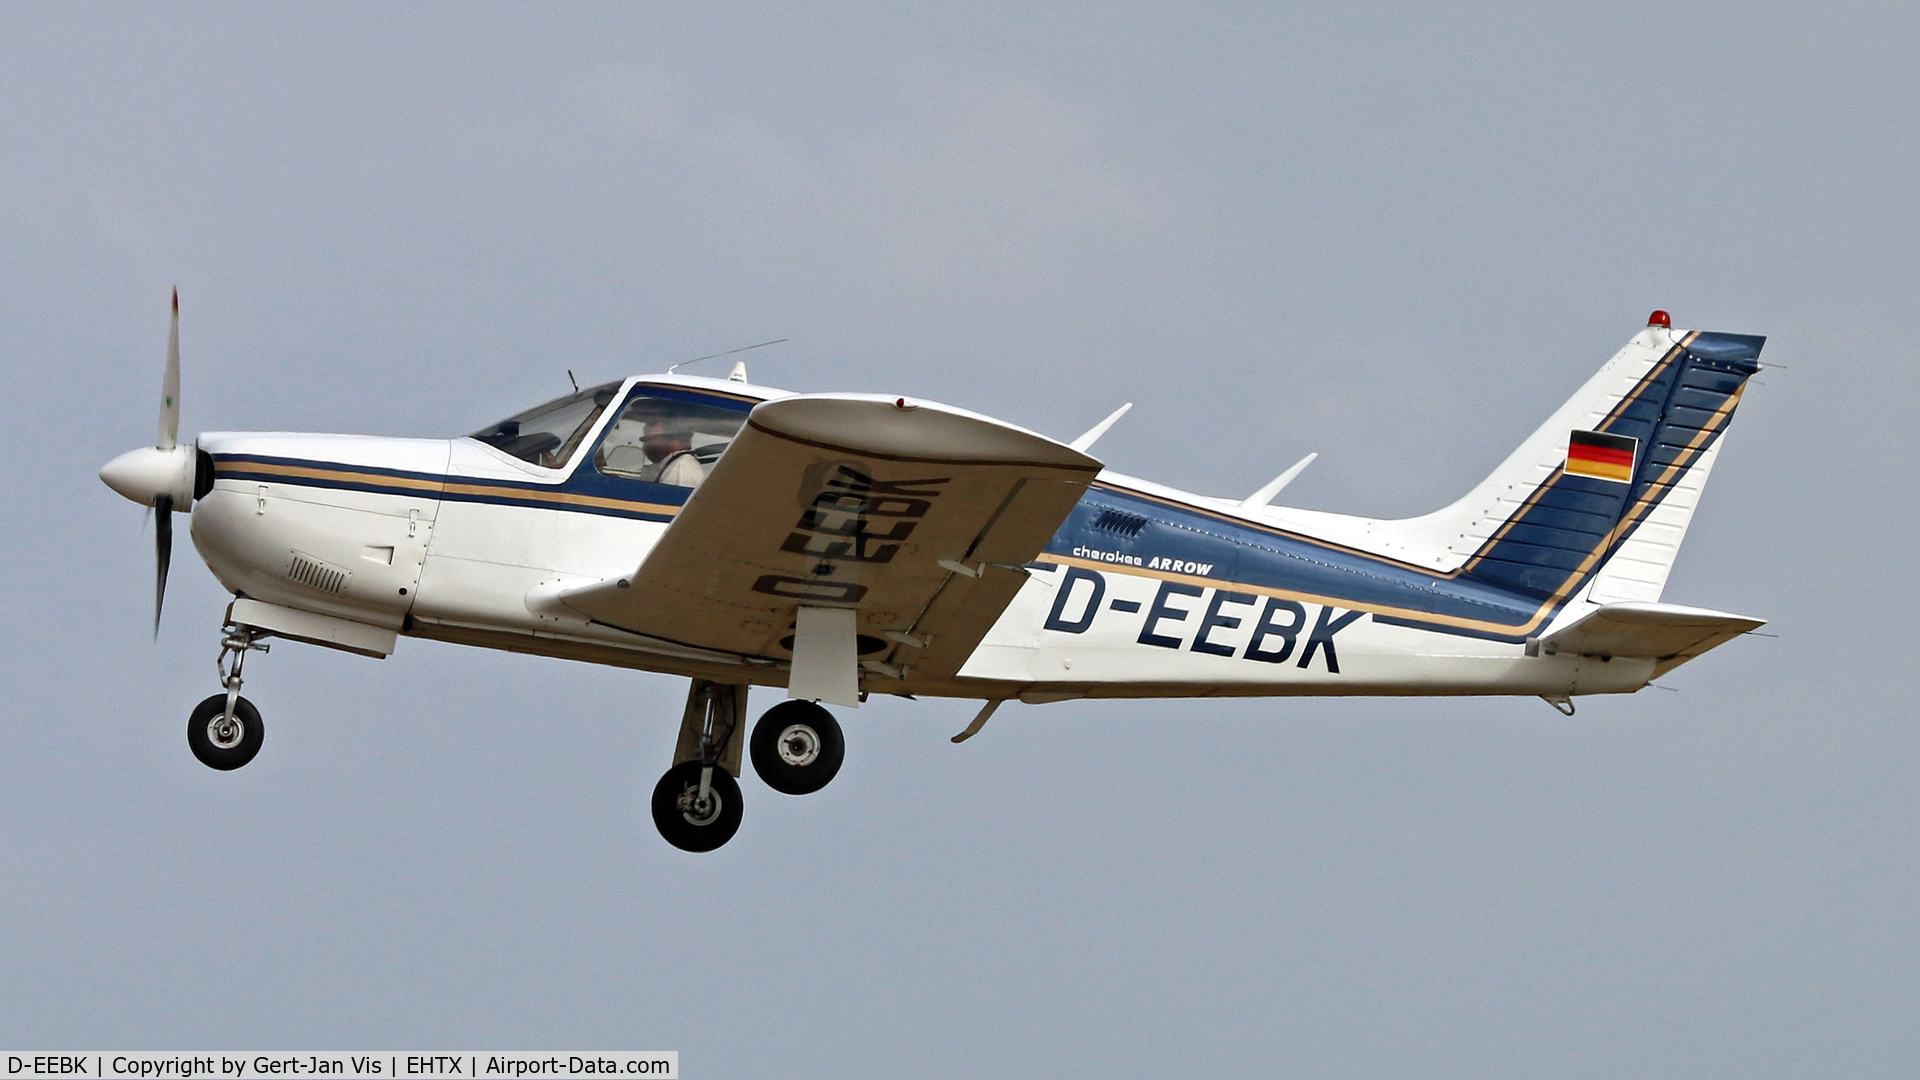 D-EEBK, 1974 Piper PA-28R-200 Cherokee Arrow II C/N 28R-7435014, Taking off during the Texel Air Show